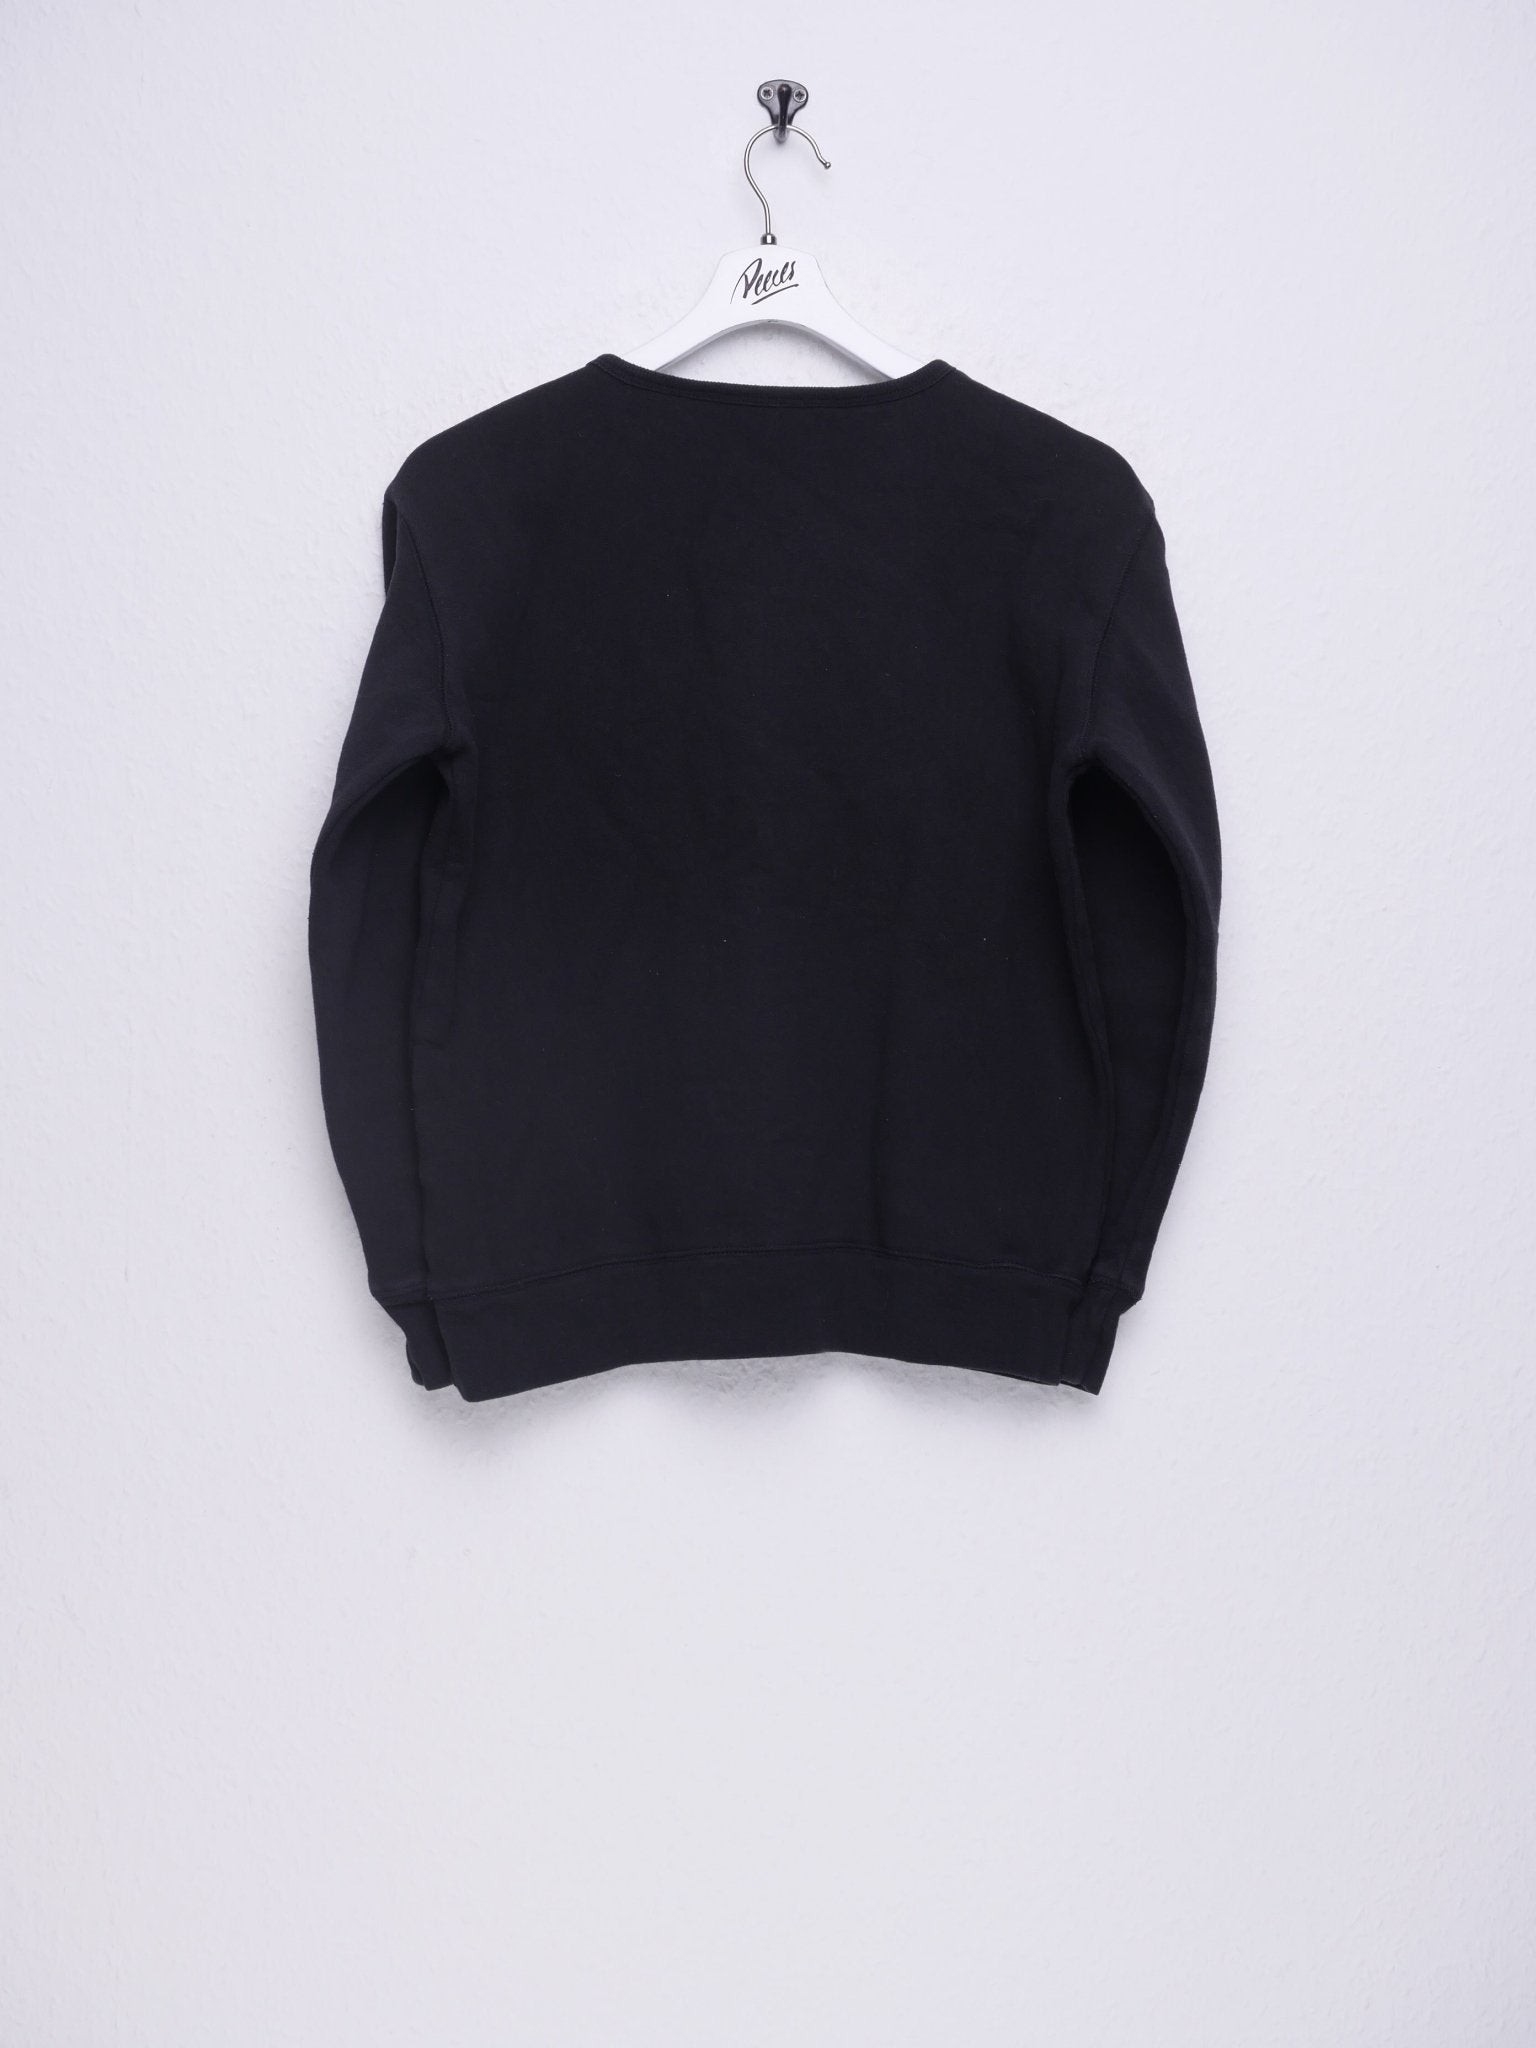 Tommy Hilfiger printed Logo black Sweater - Peeces